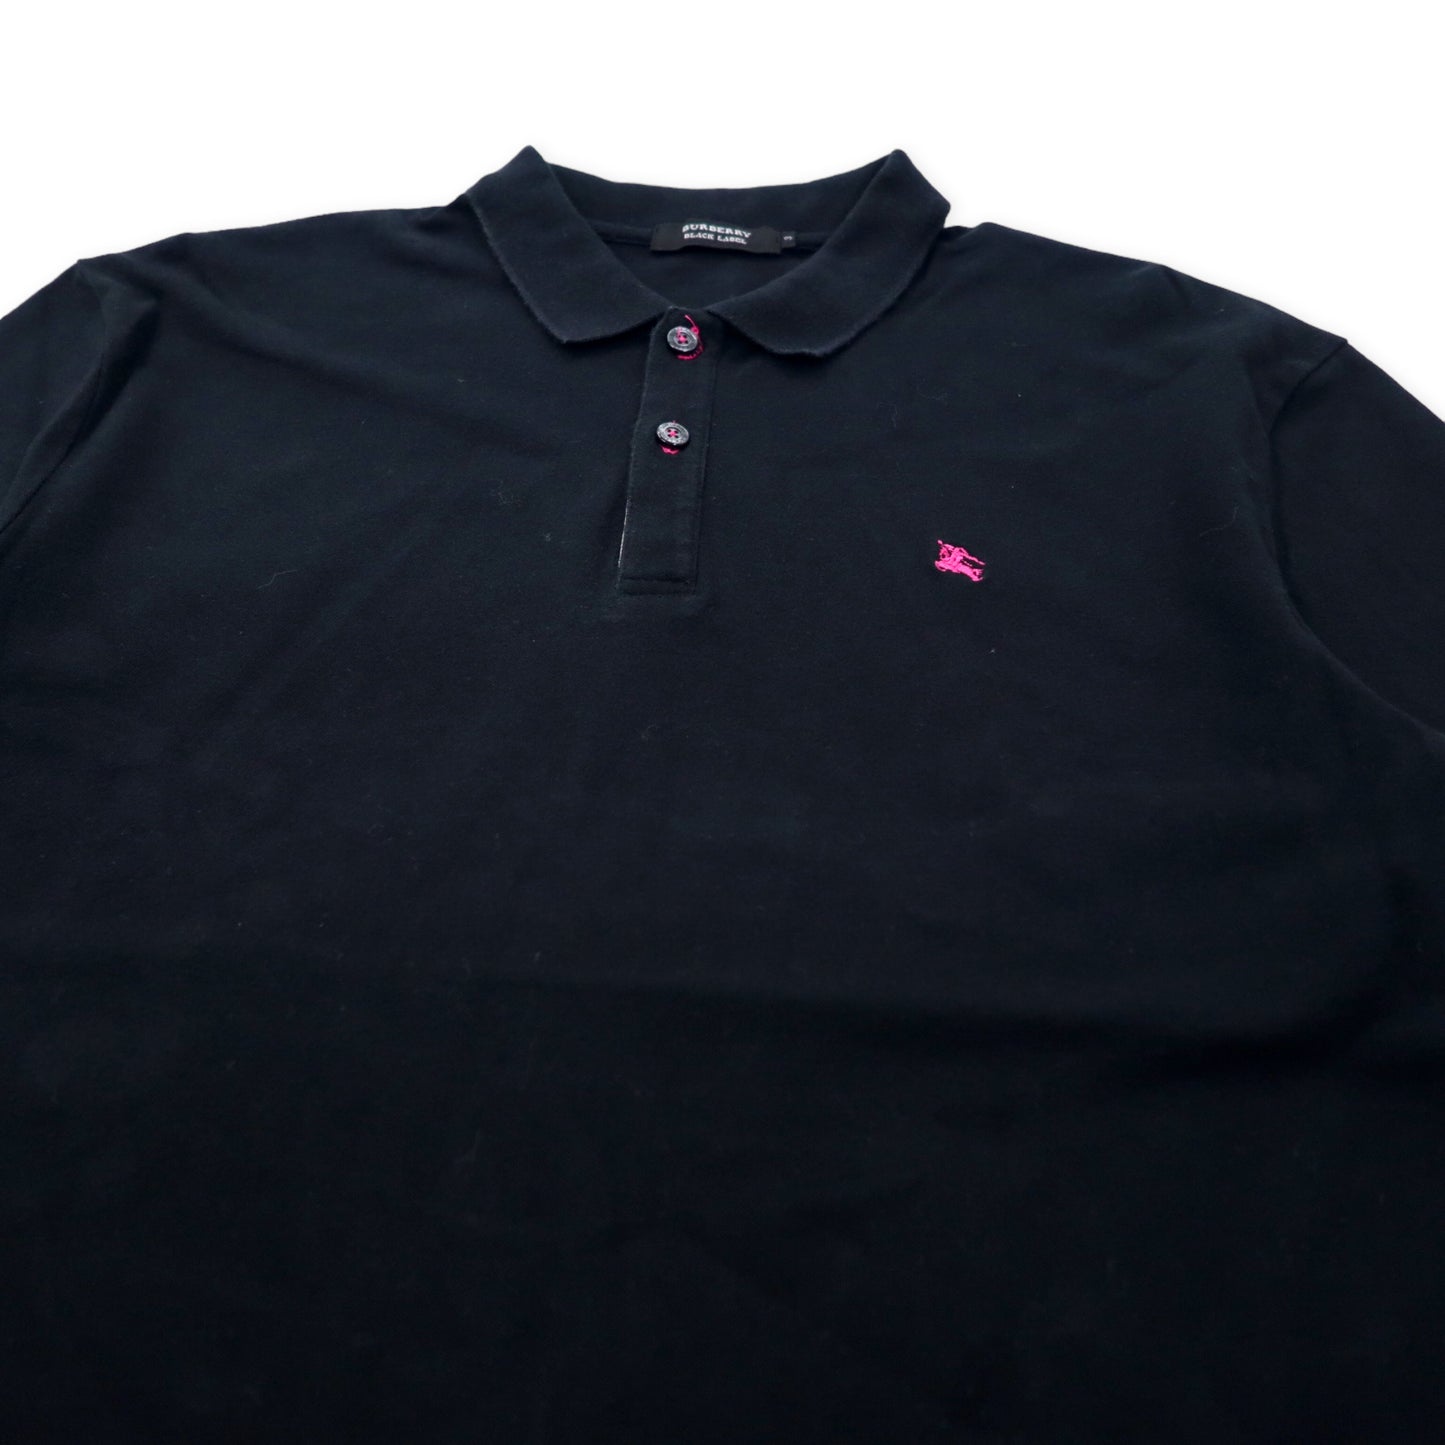 BURBERRY BLACK LABEL ポロシャツ 3 ブラック コットン ワンポイントロゴ刺繍 BMV38-436-09